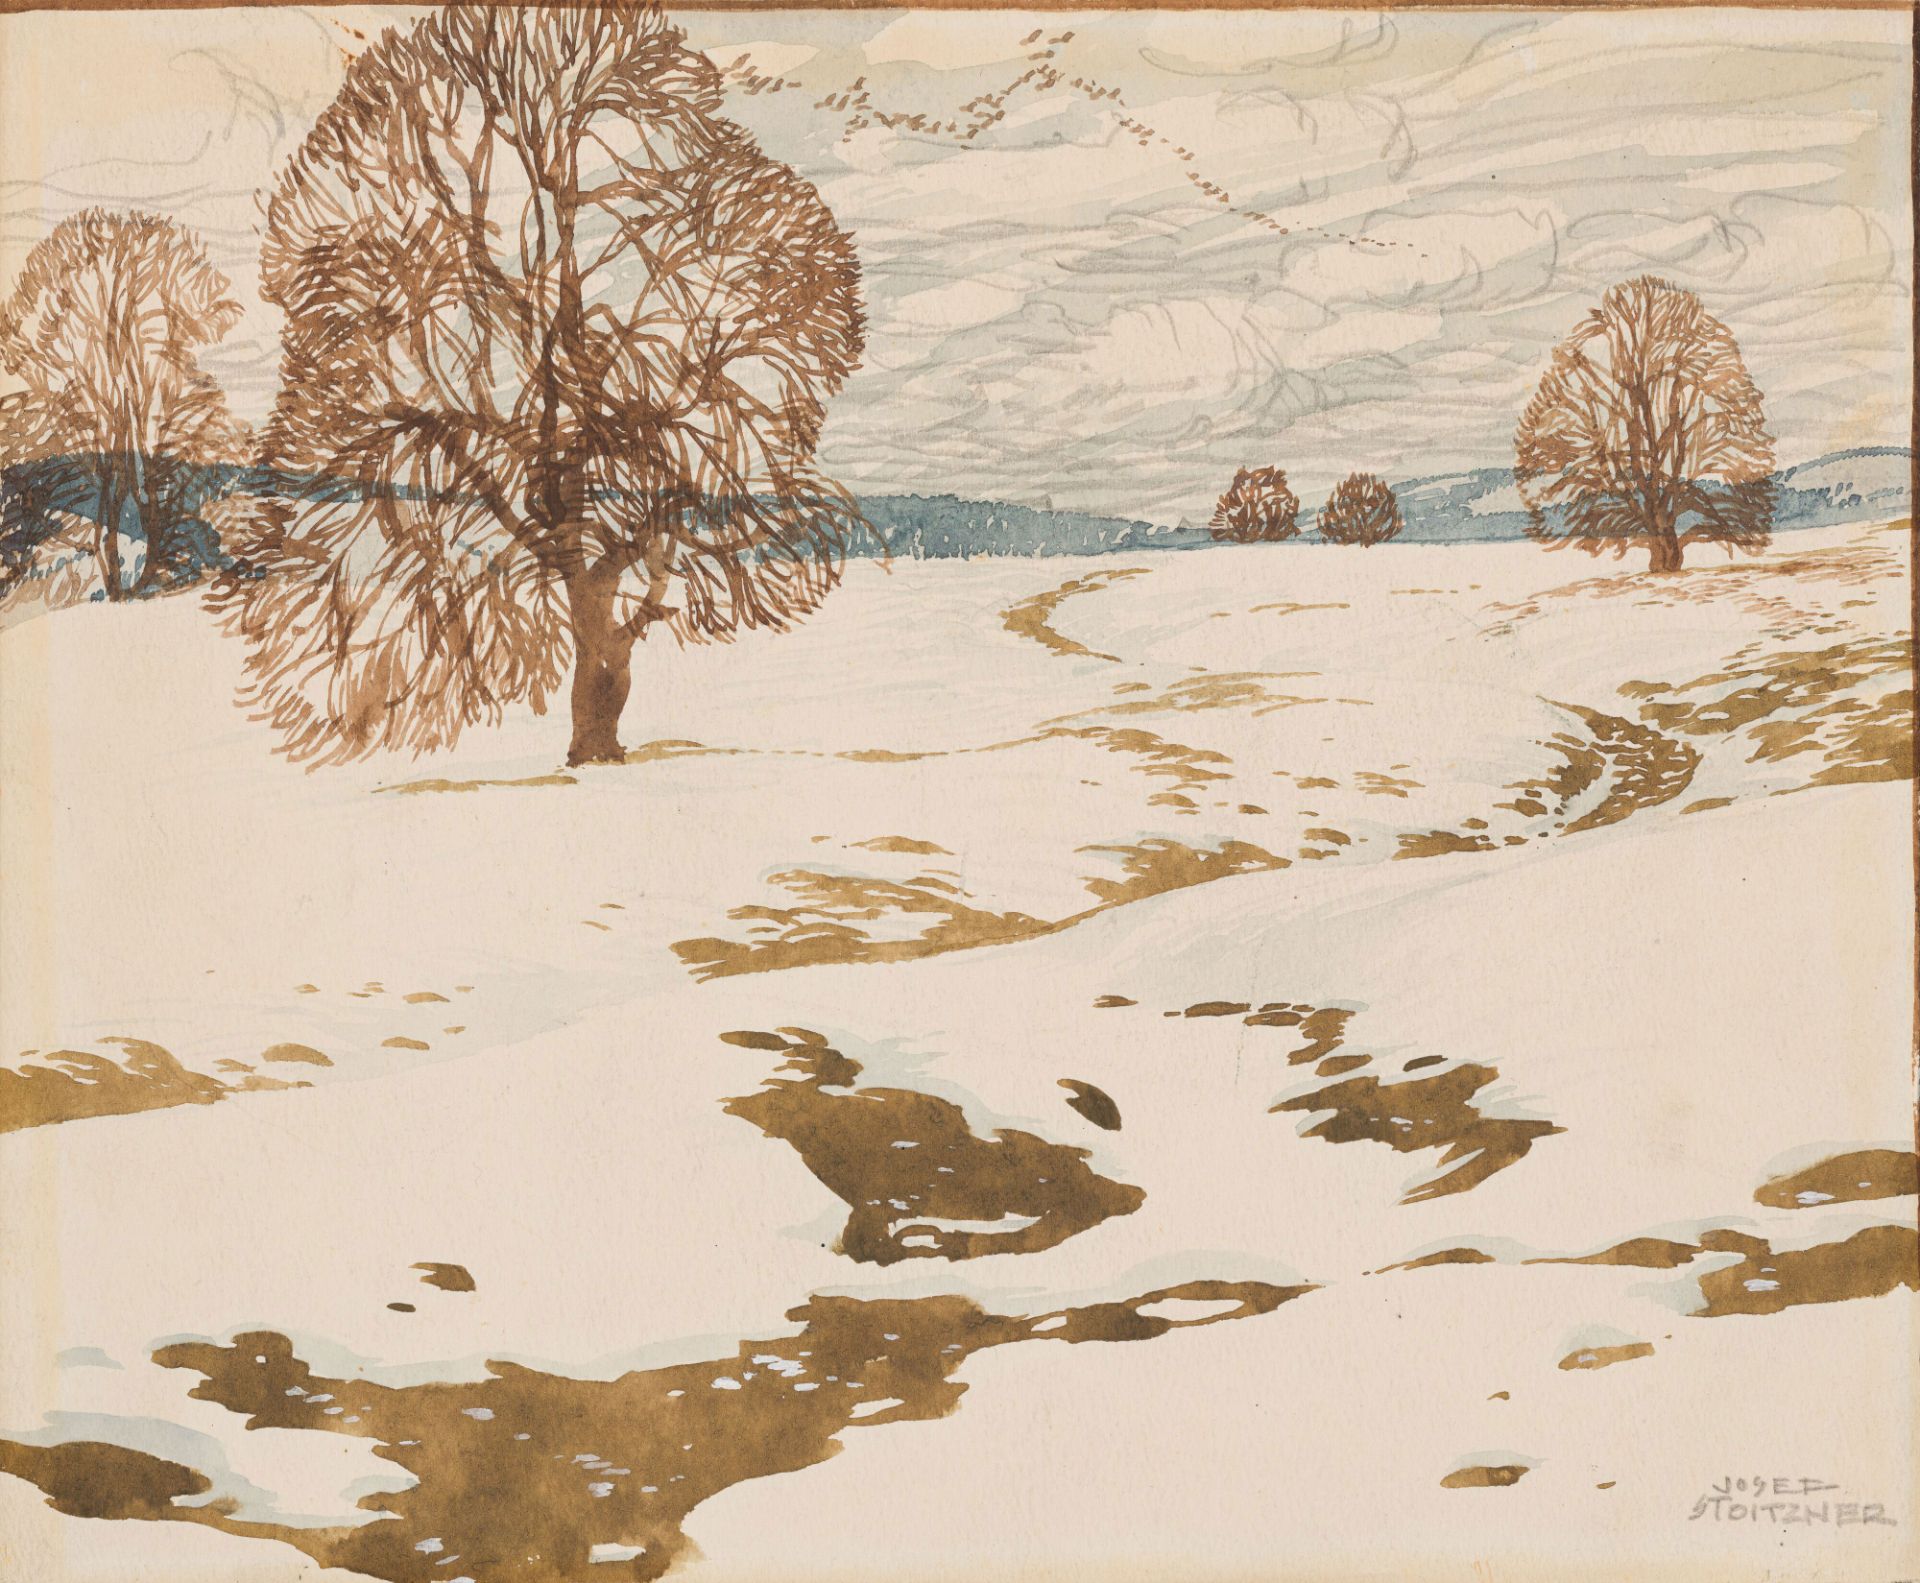 Josef Stoitzner: Winter landscape